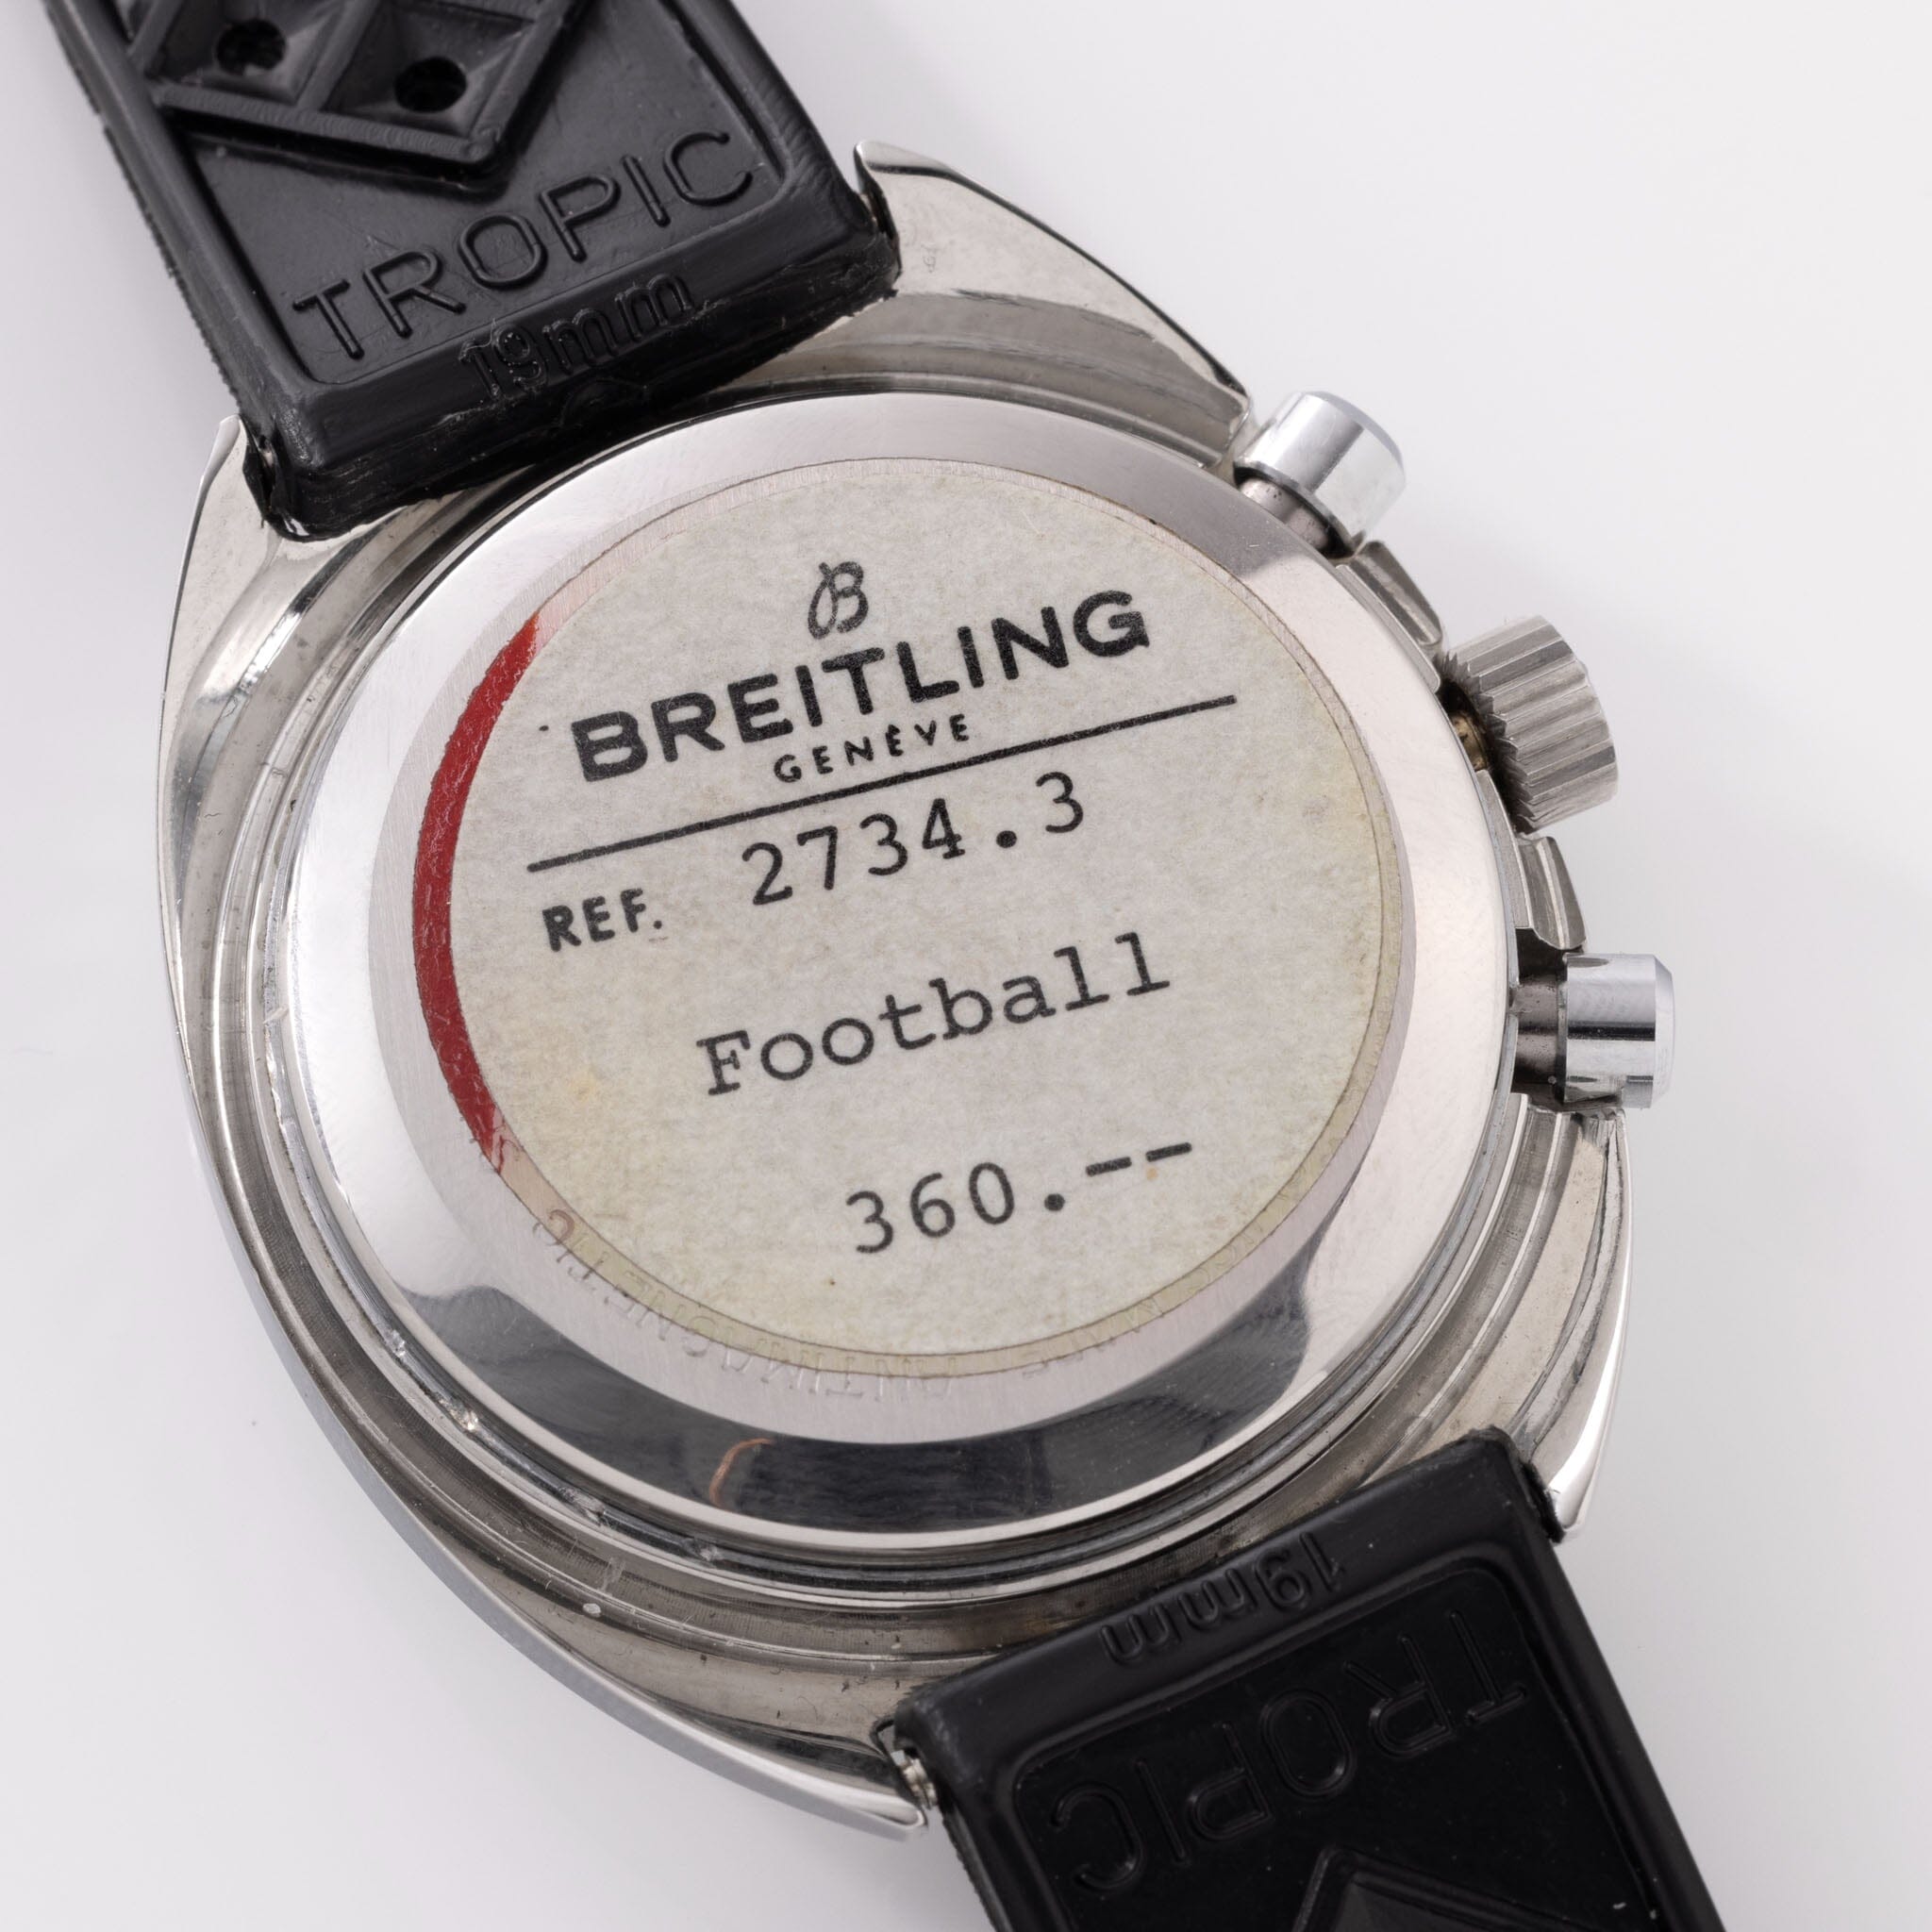 Breitling Football Timer Chronograph ref 2734.3